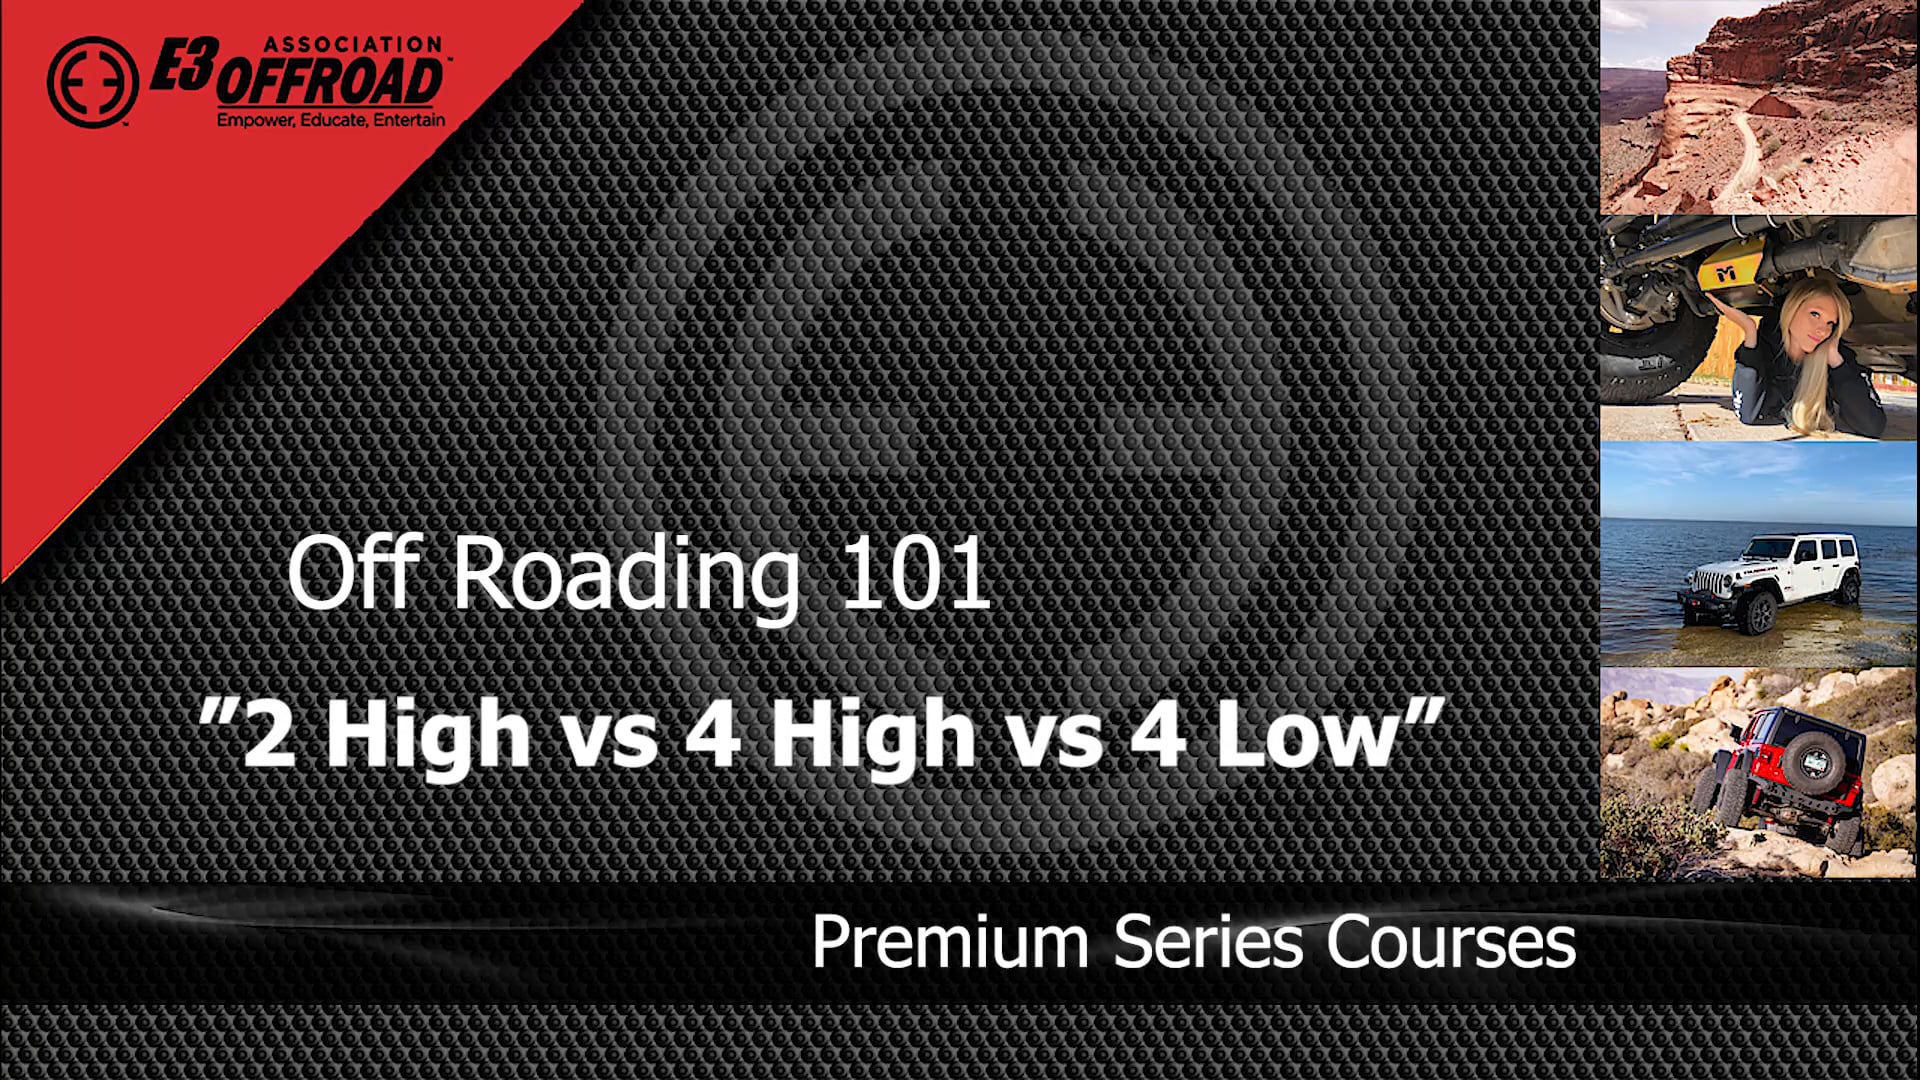 Off Roading 101 2 High vs 4 High vs 4 Low